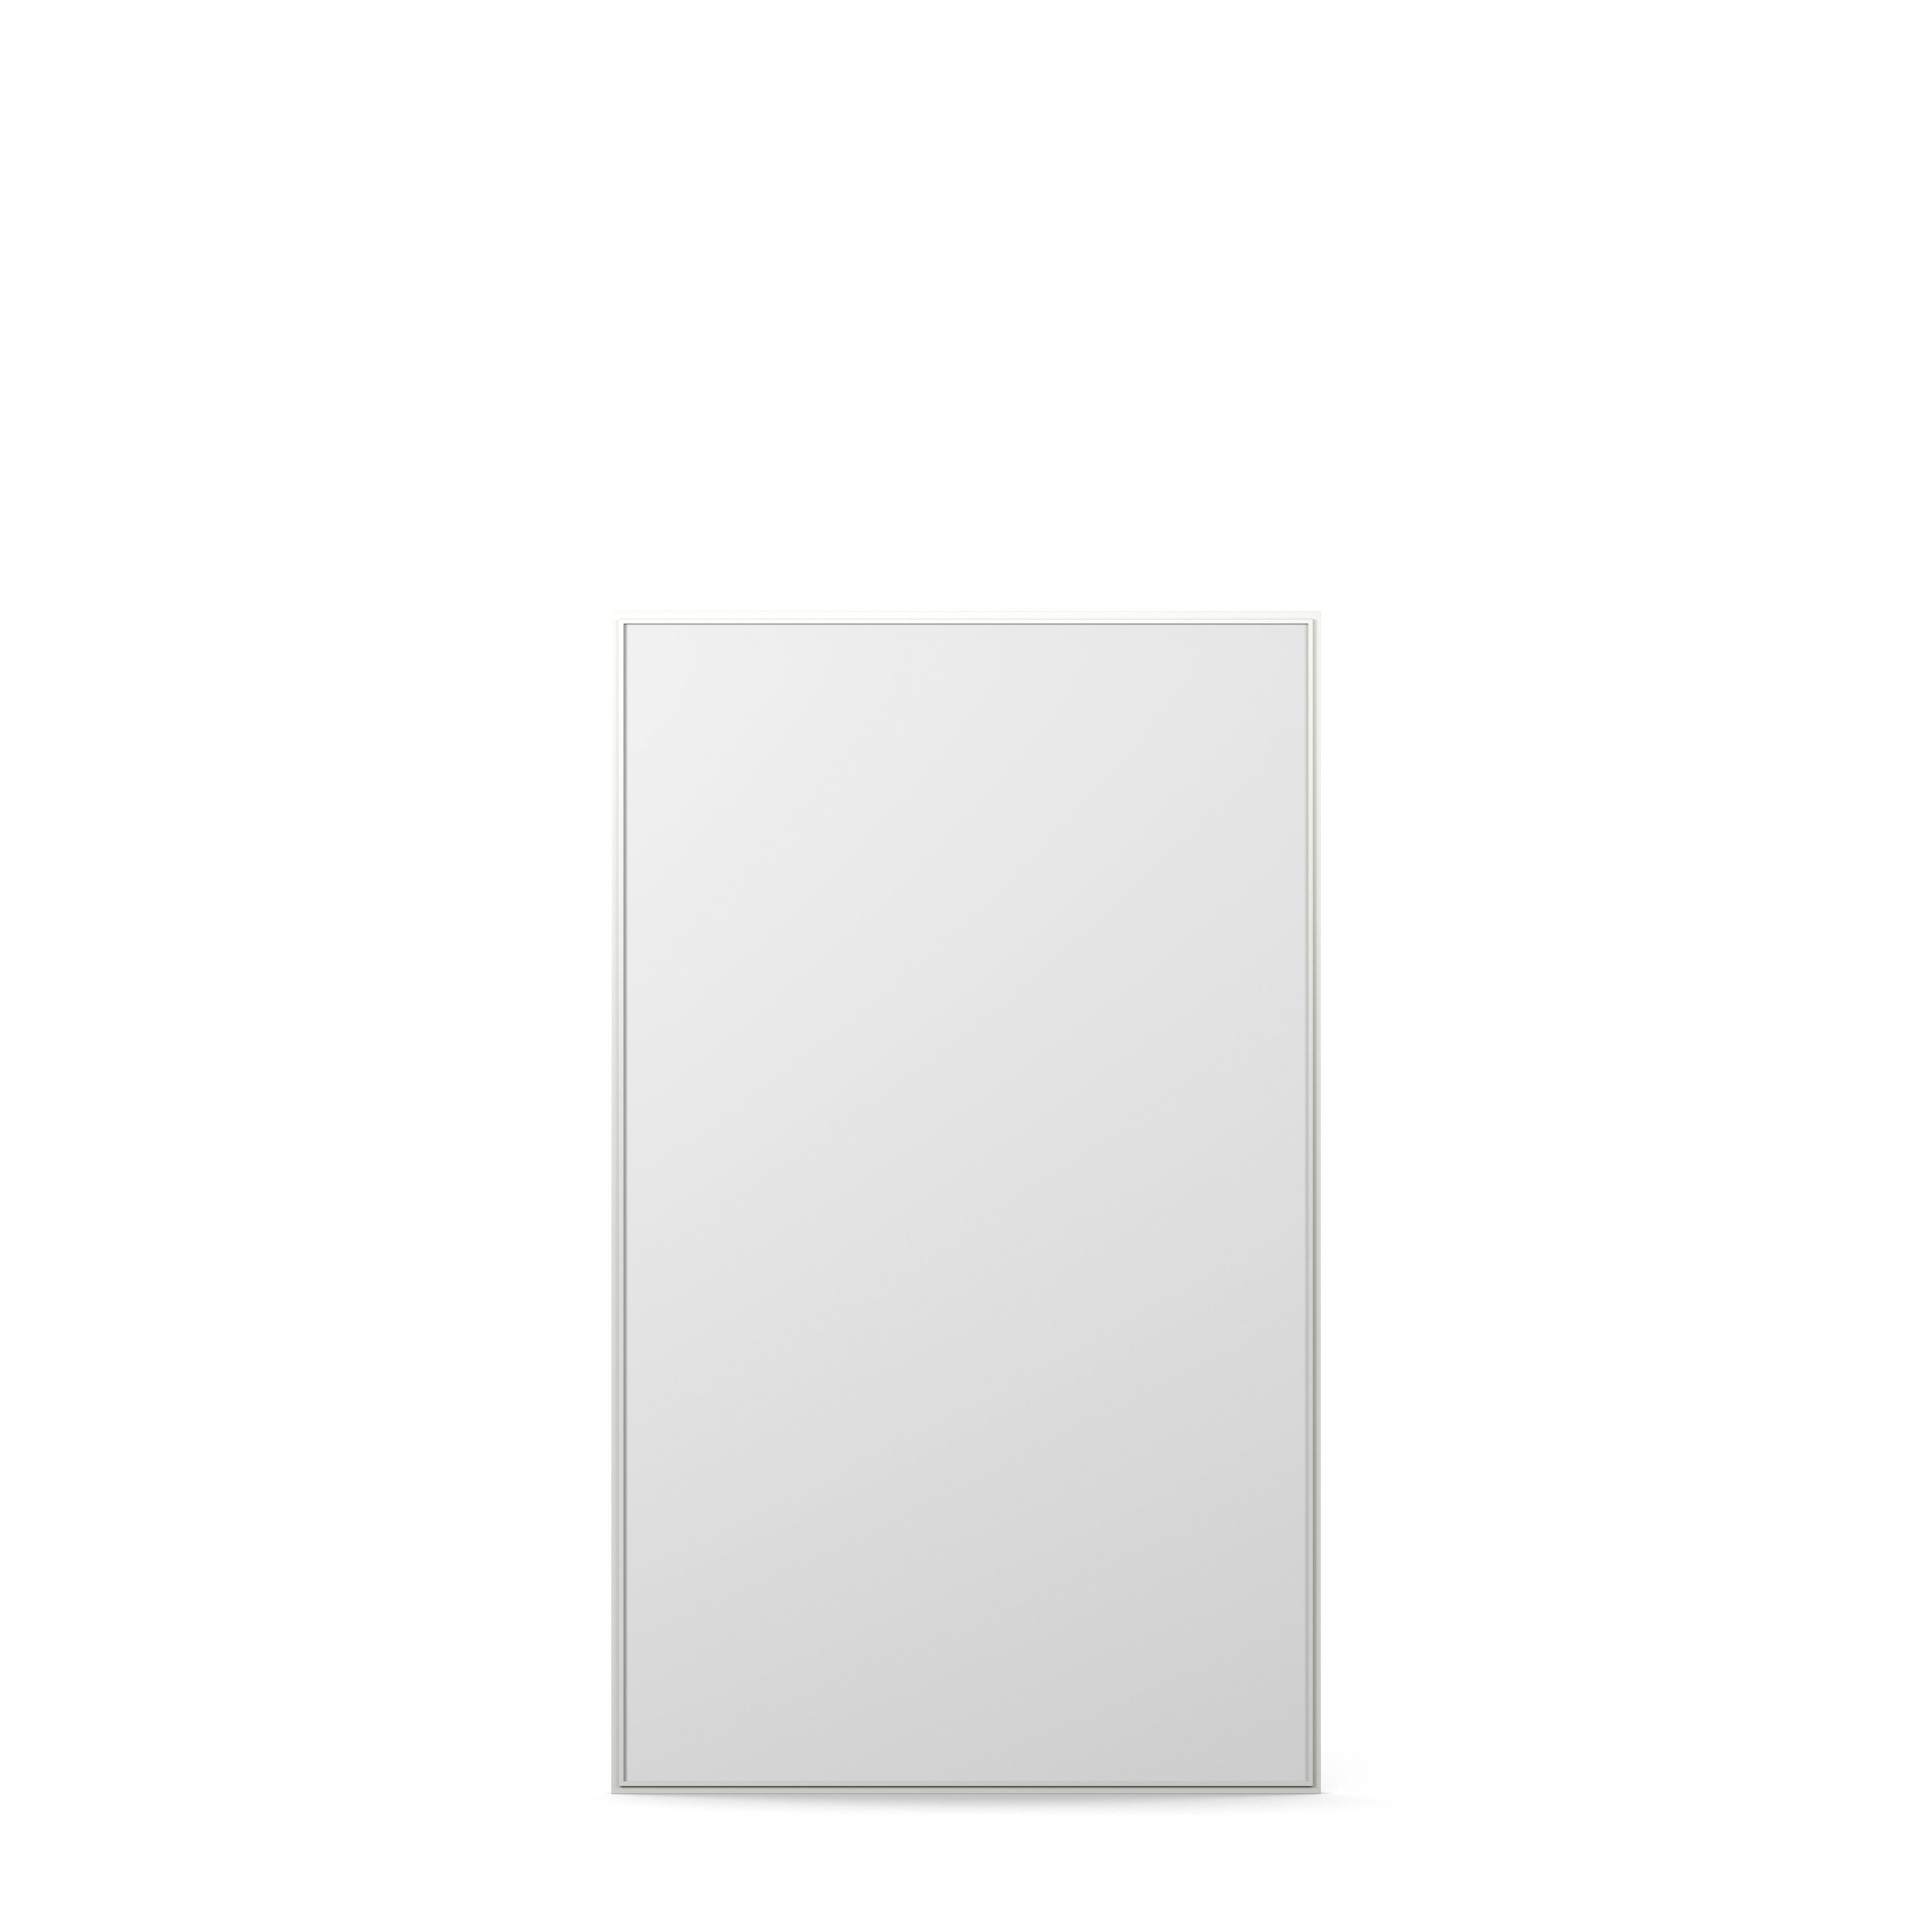 Englesson Edge White Cube Spegel Rektangulär 831D #färg_Edge White